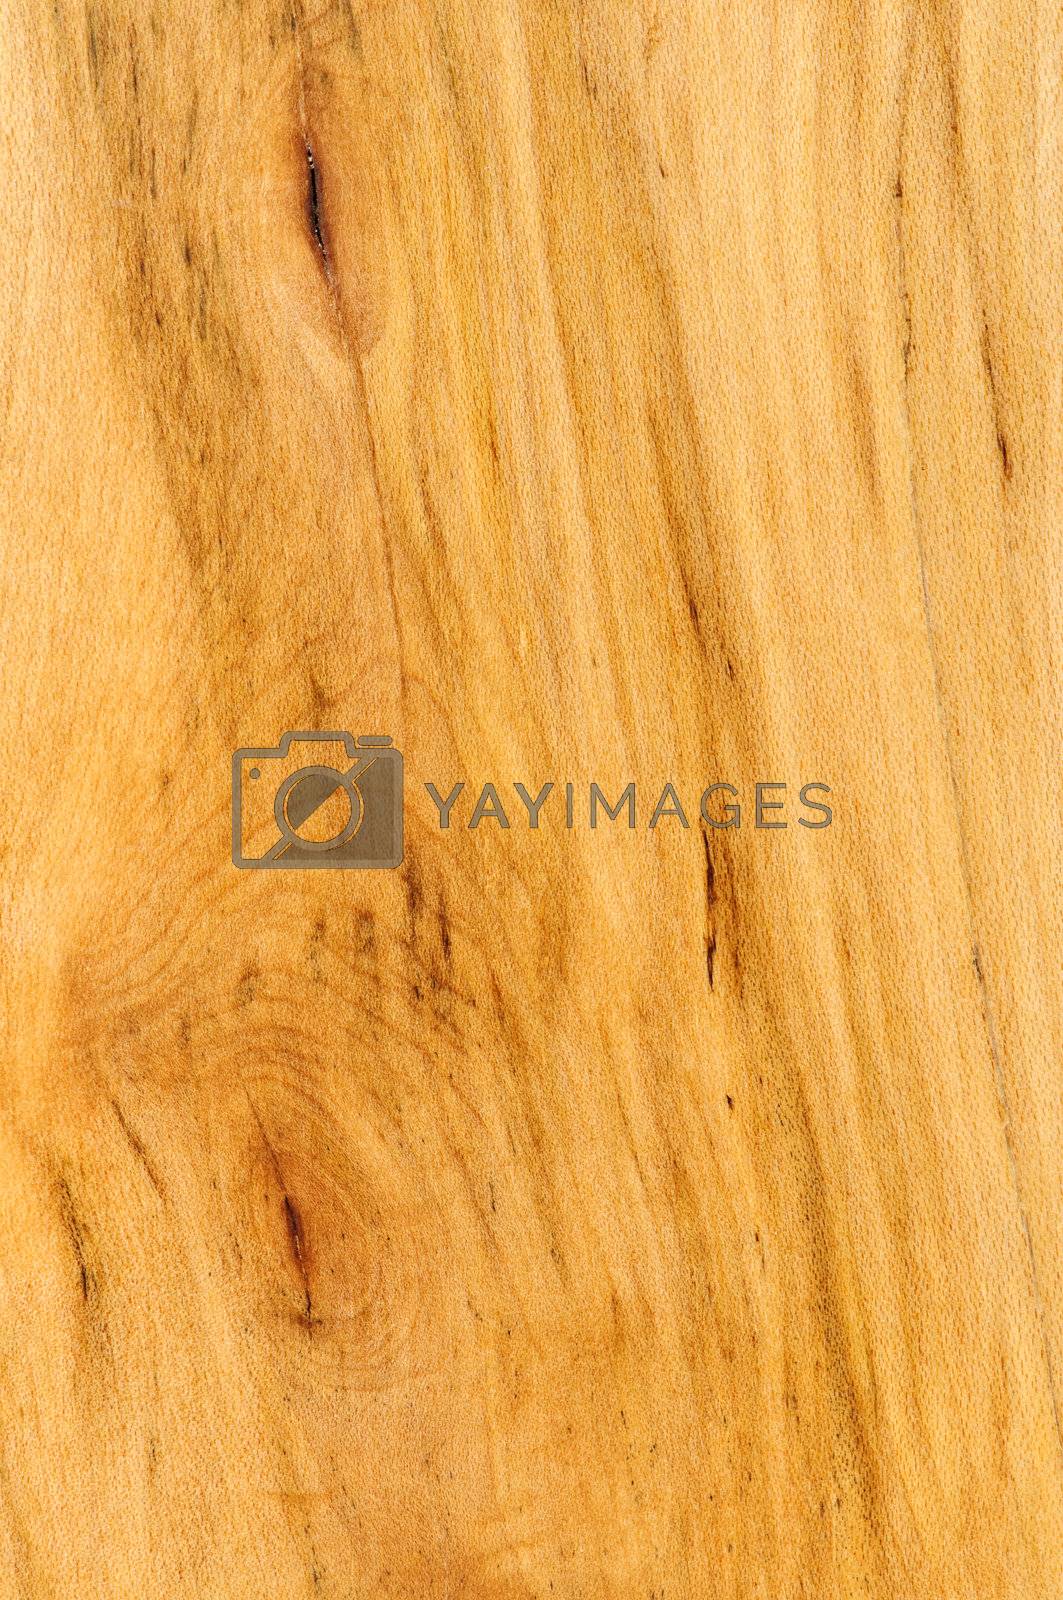 Royalty free image of Pre-finished hardwood floor sample by elenathewise